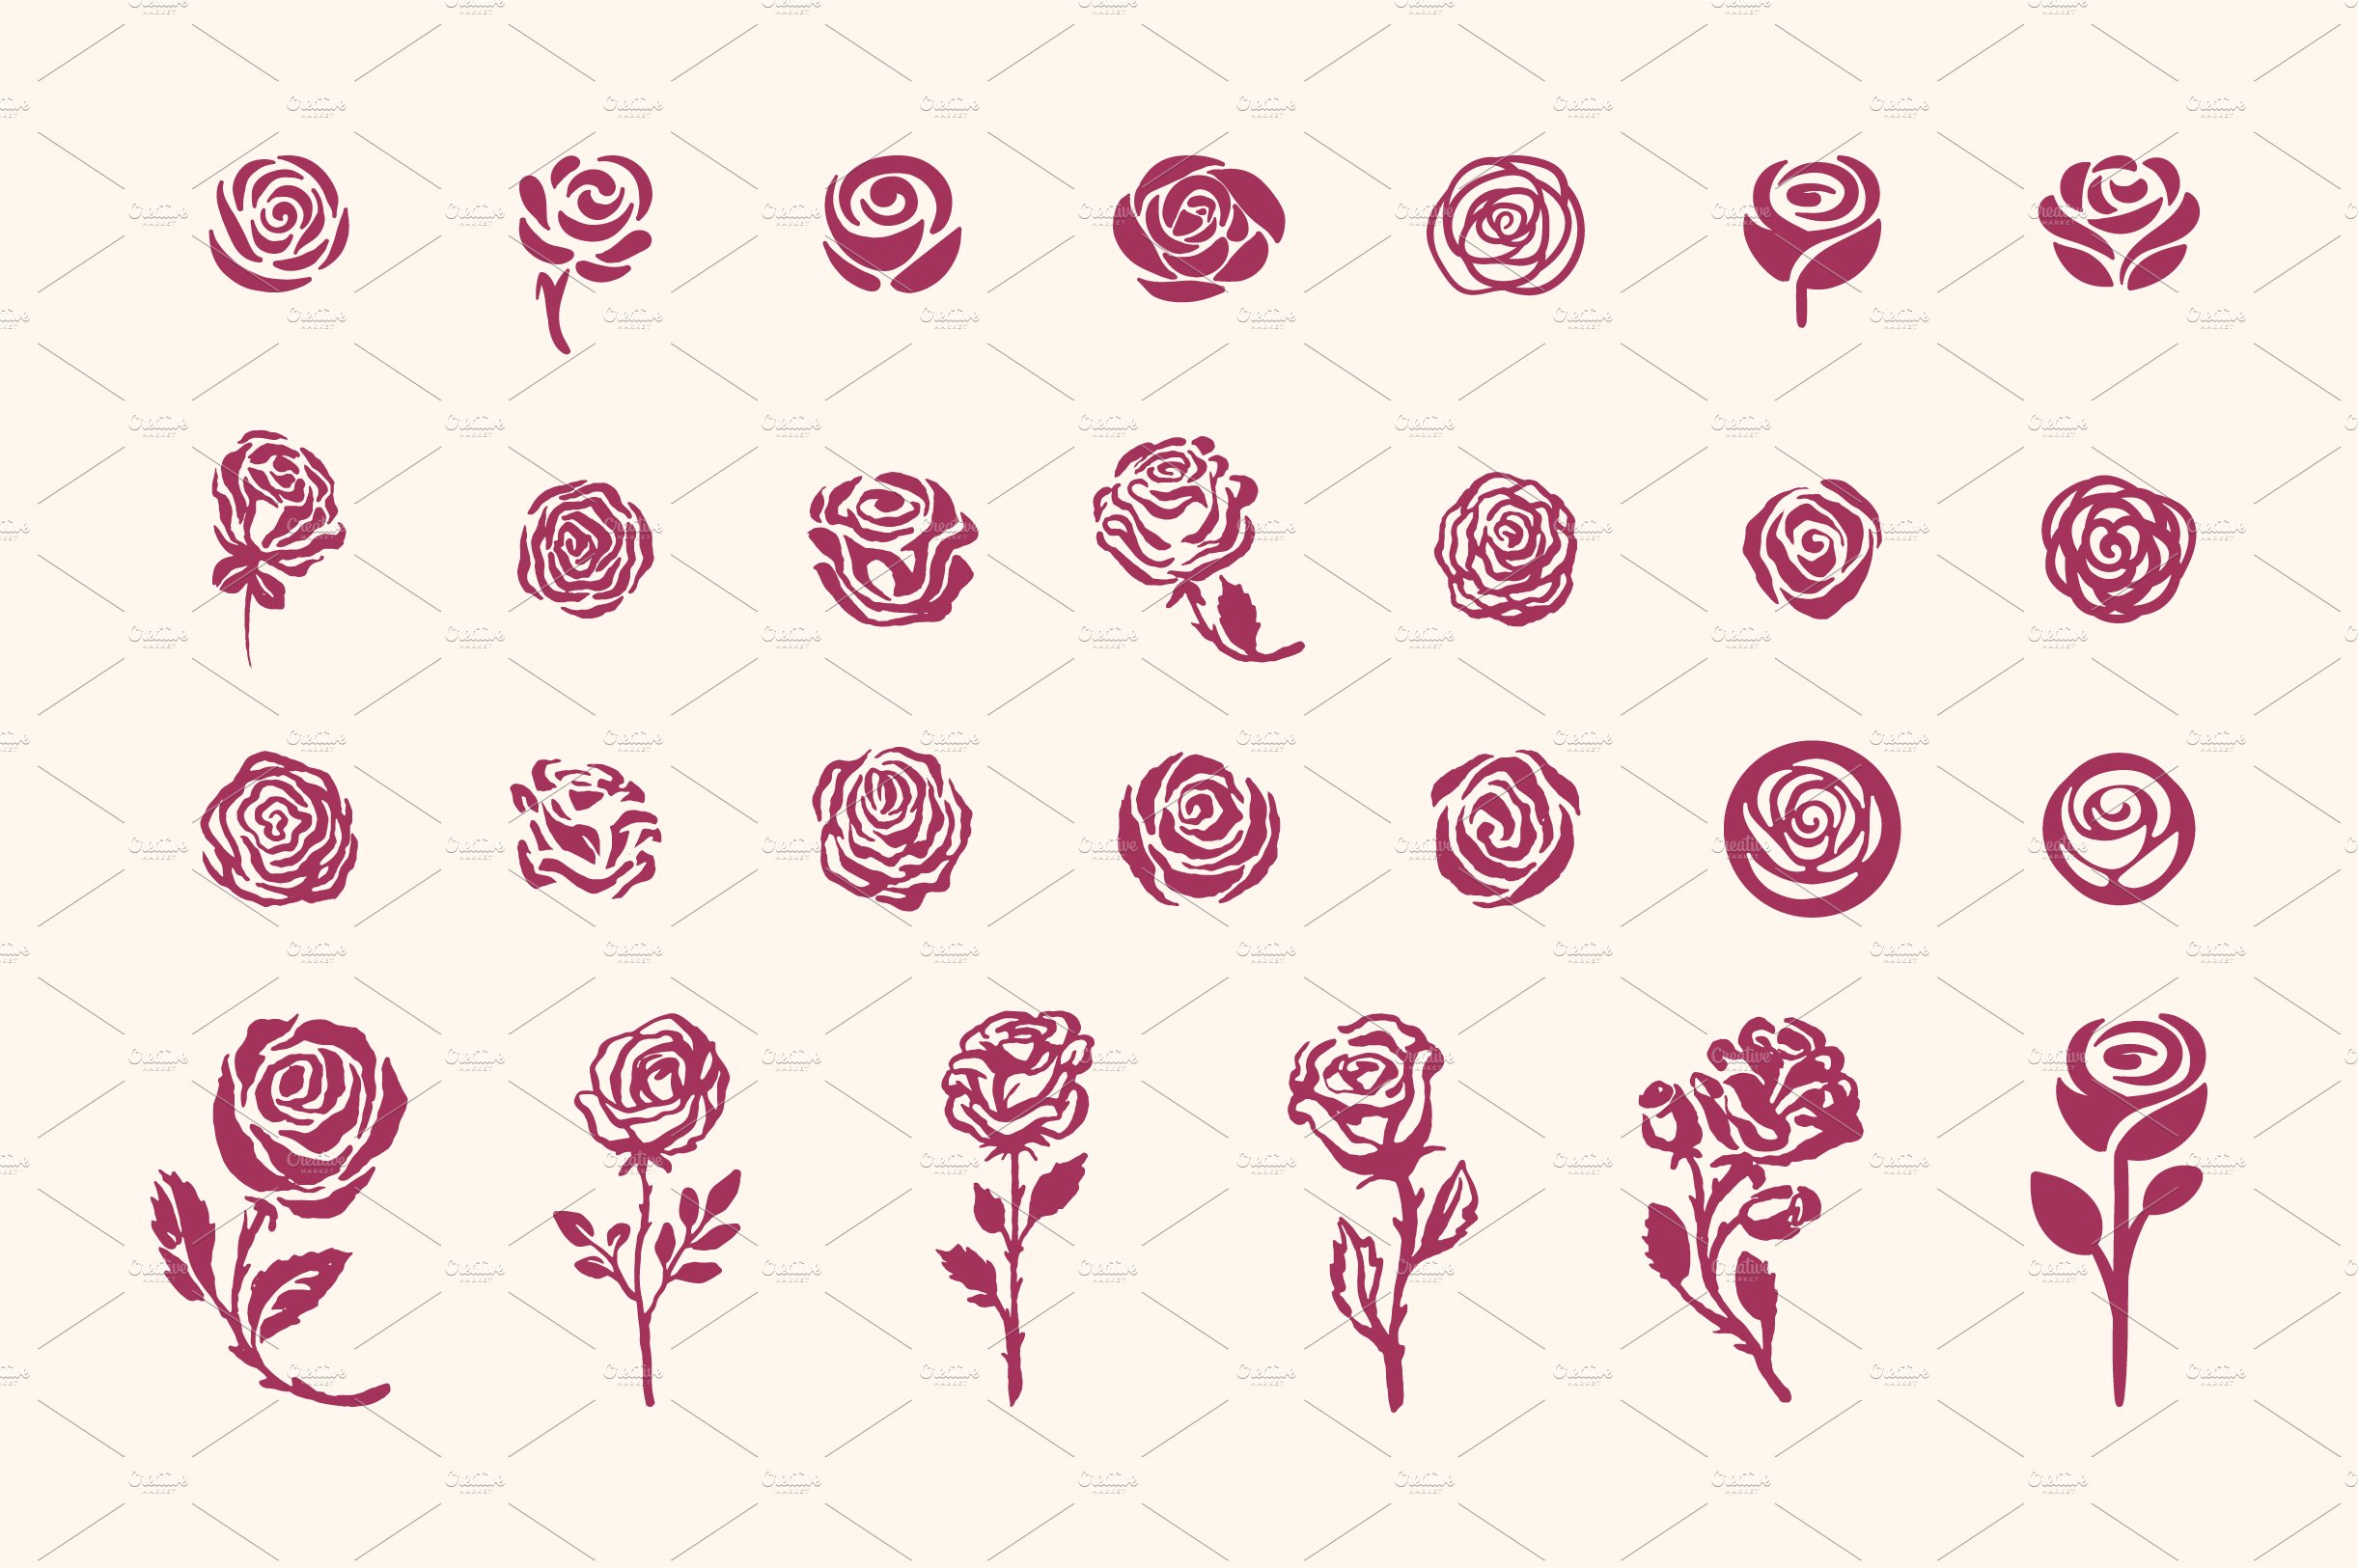 27 Rose symbols icon cover image.